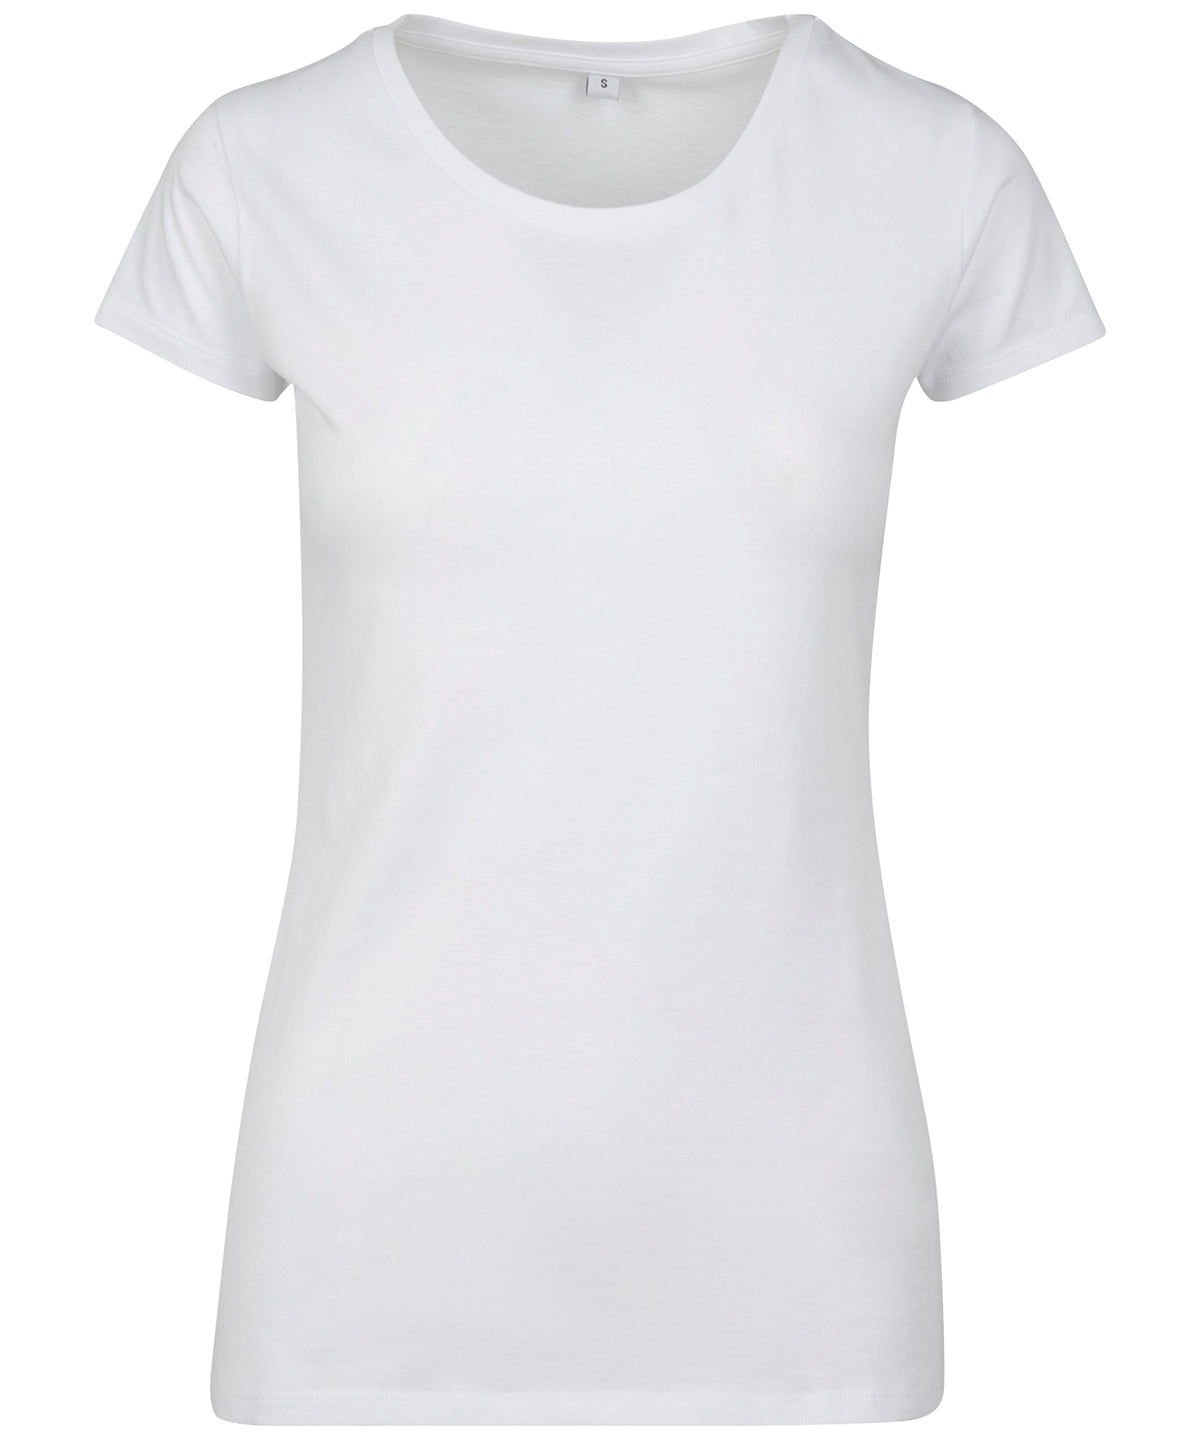 Stuttermabolir - Women's Merch T-shirt